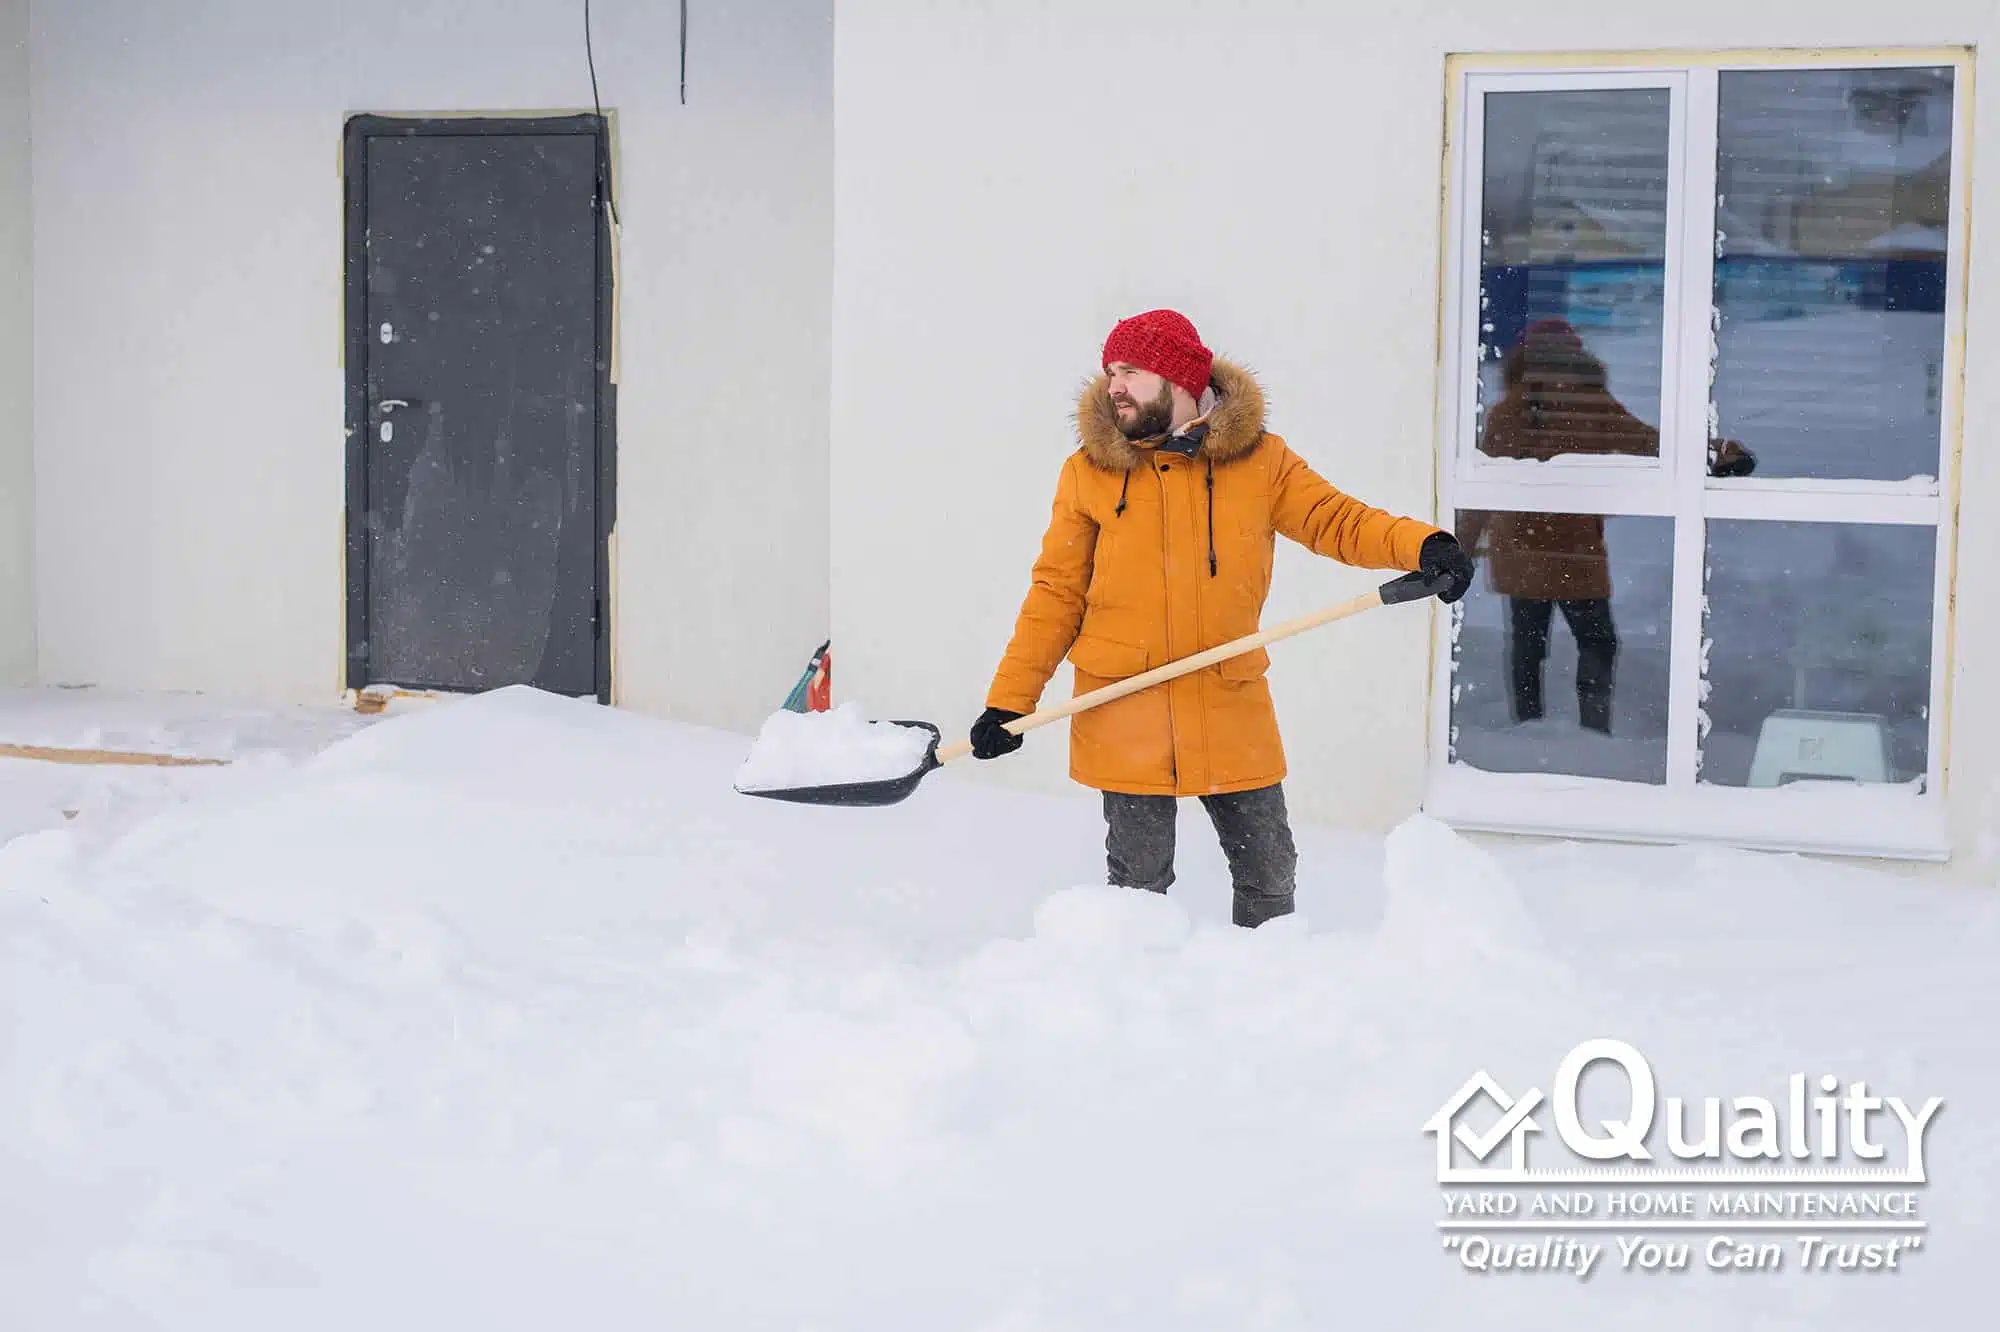 Quality Yard & Home Maintenance shoveling snow on residential sidewalk